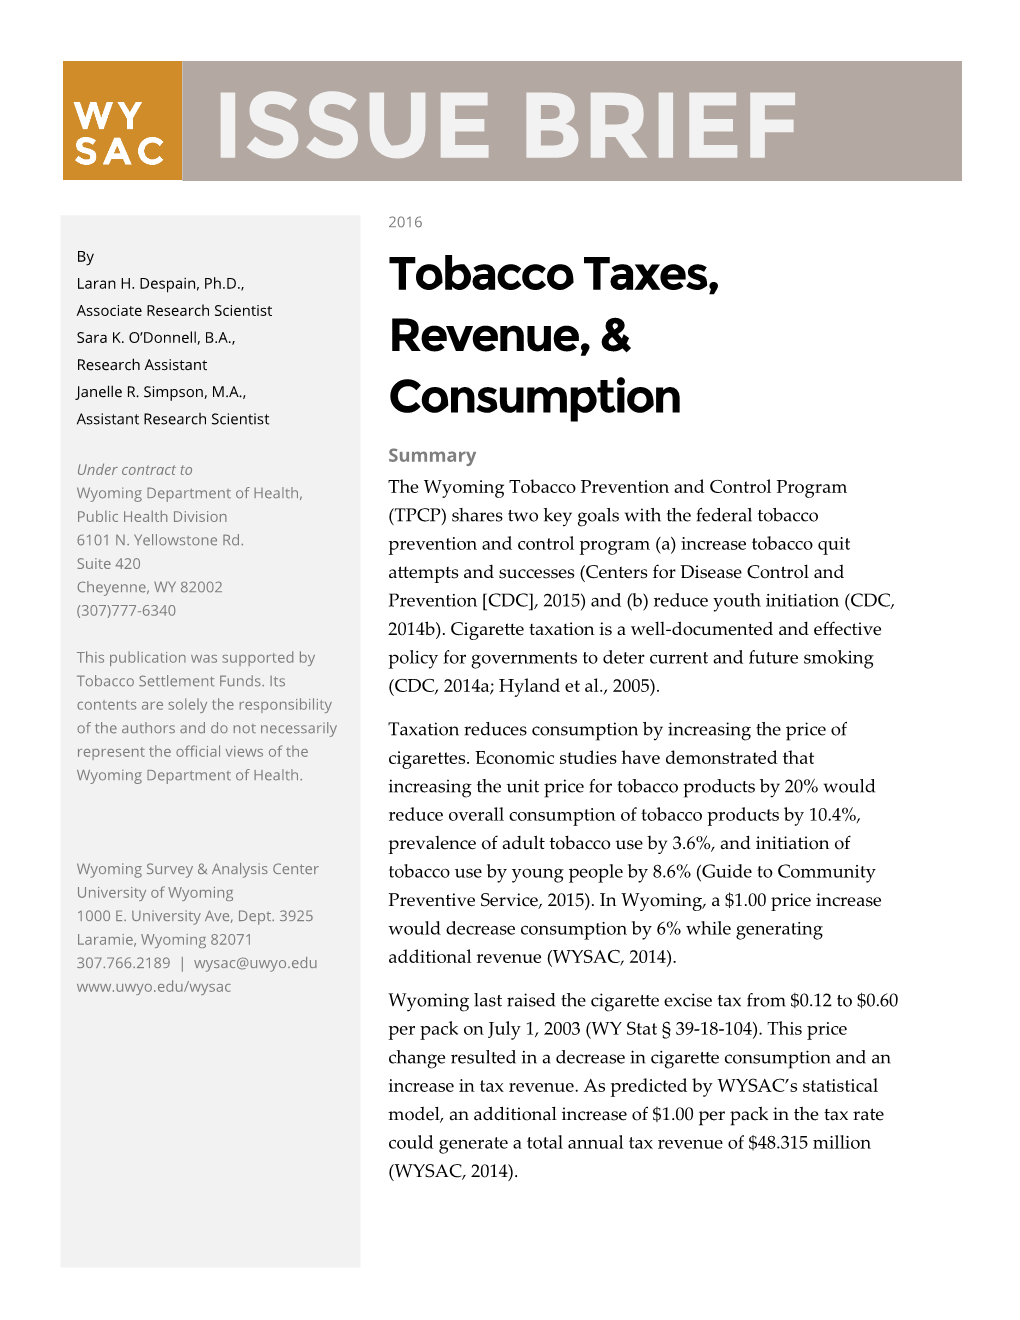 Tobacco Taxes, Revenue, & Consumption